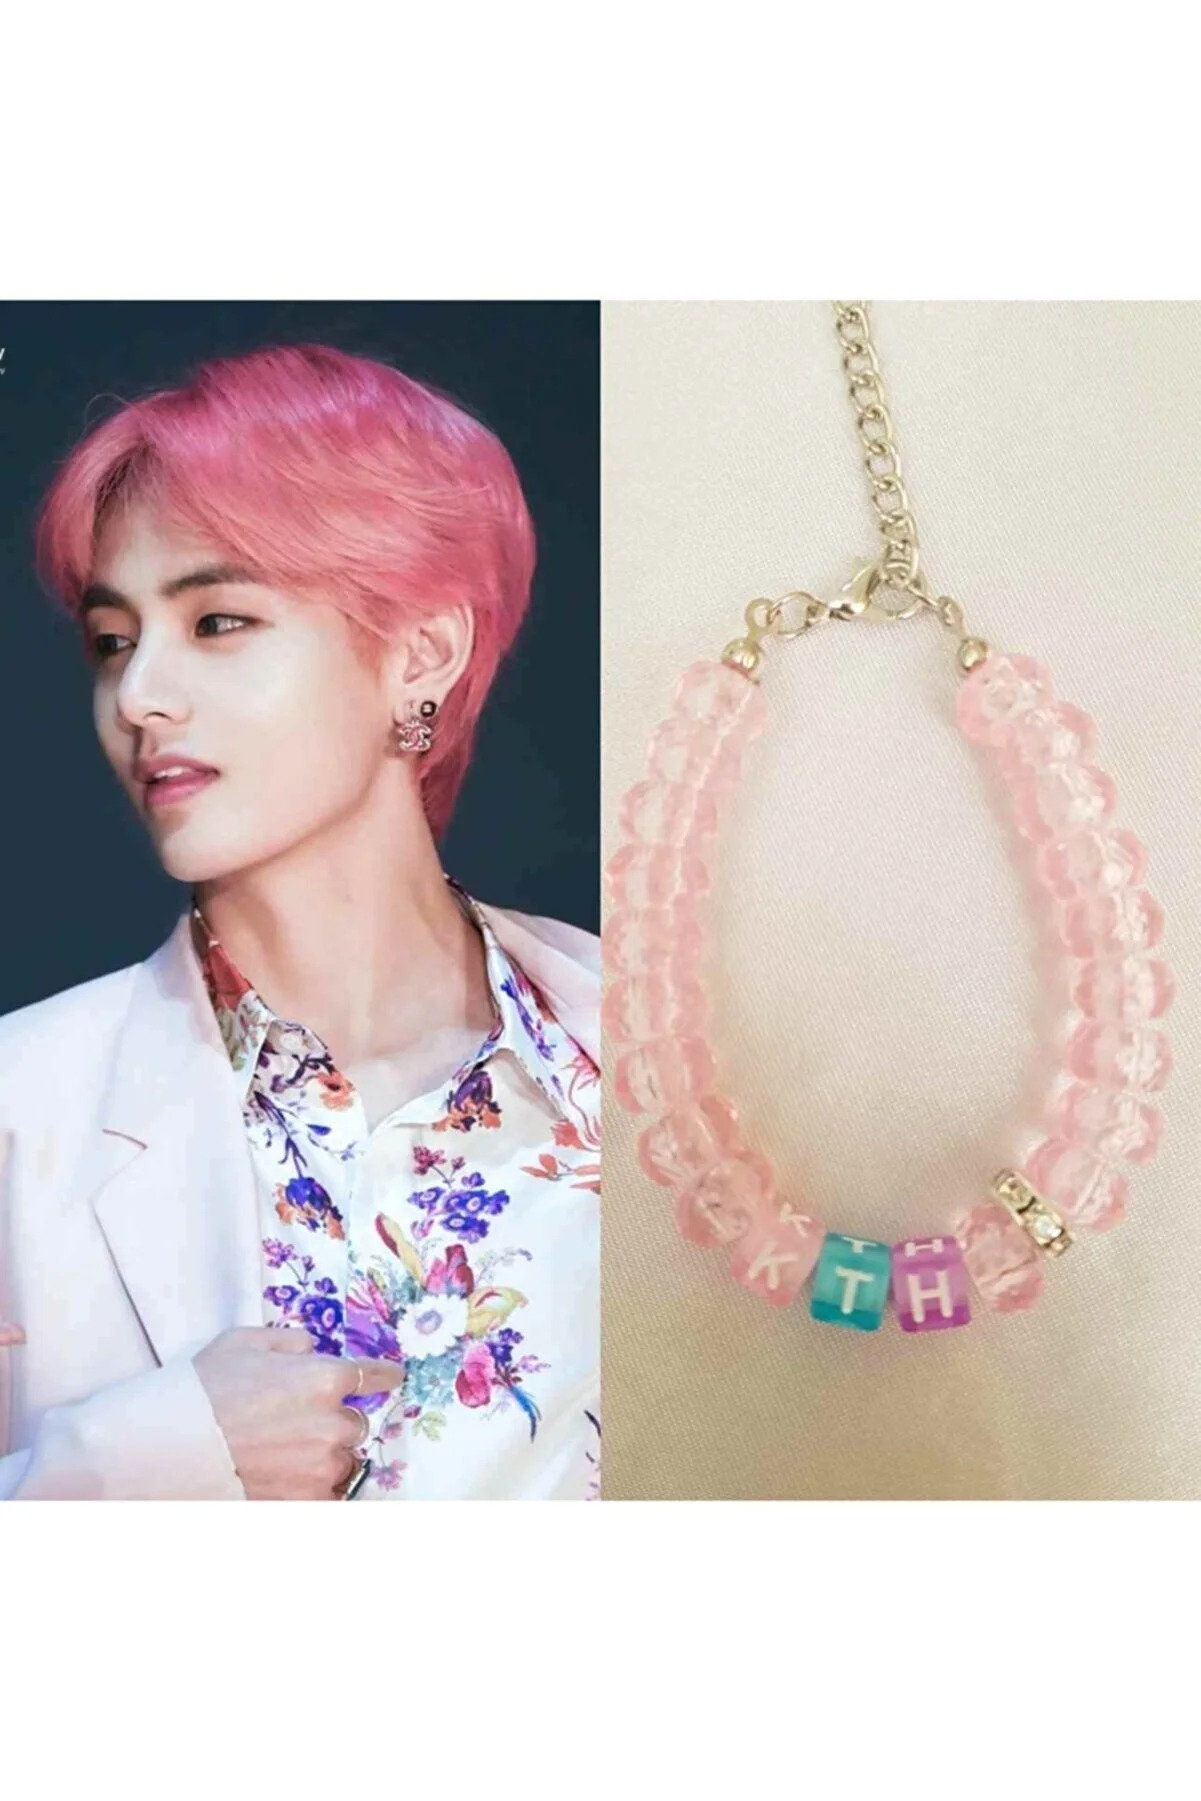 Pearl earrings bts v kim taehyung inspired, beaded vintage retro earring,  BE concept photo, dynamite, korean kpop style